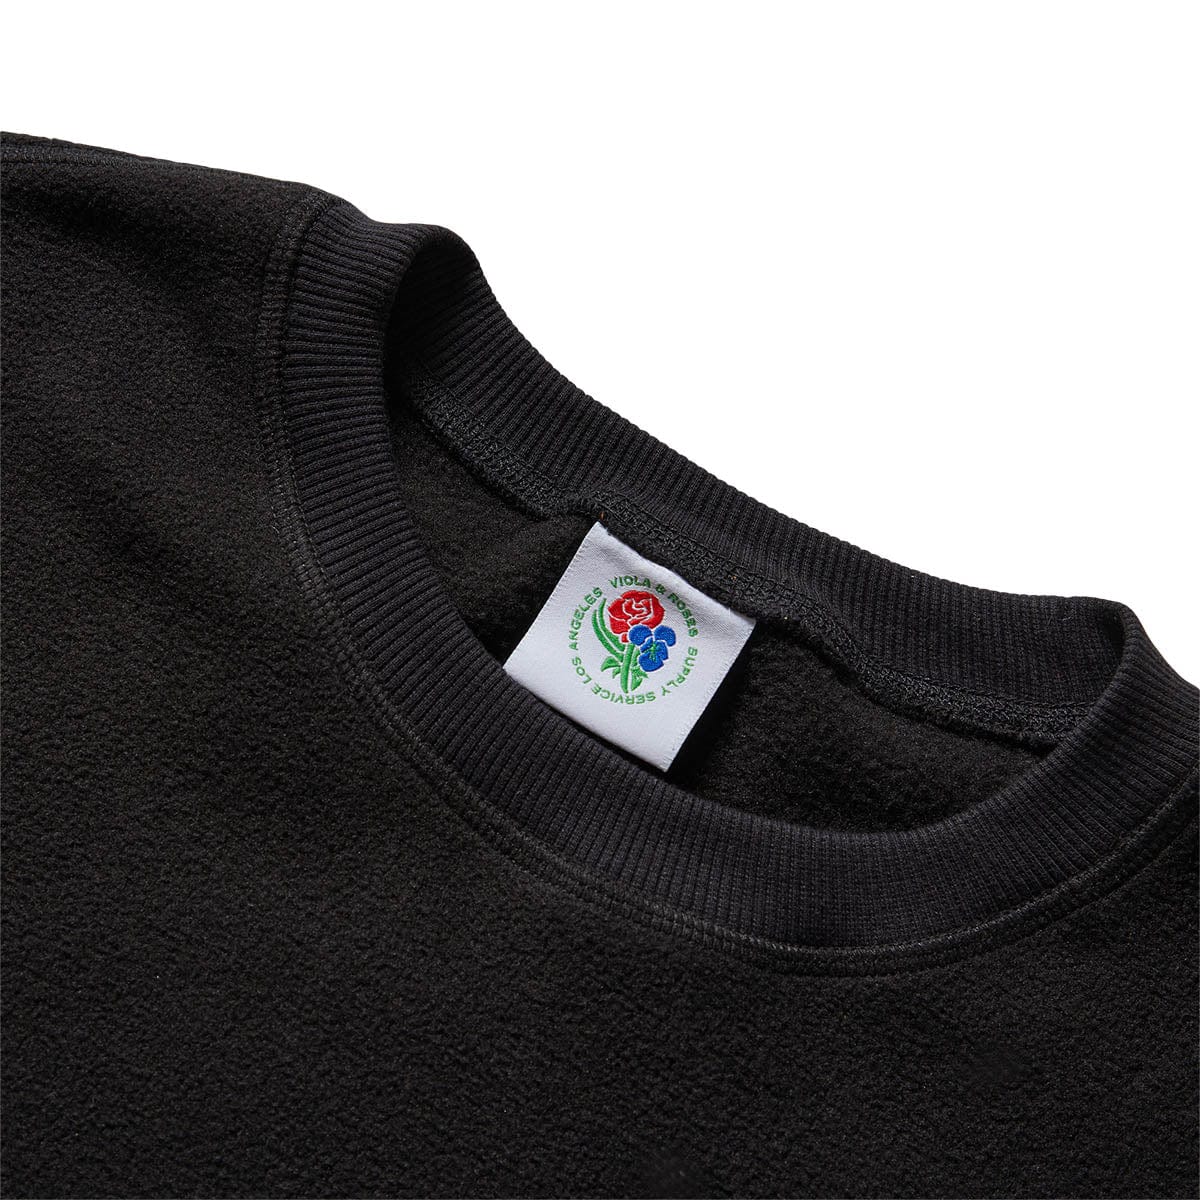 Viola and Roses Hoodies & Sweatshirts 001 CREW FLEECE SHIRT